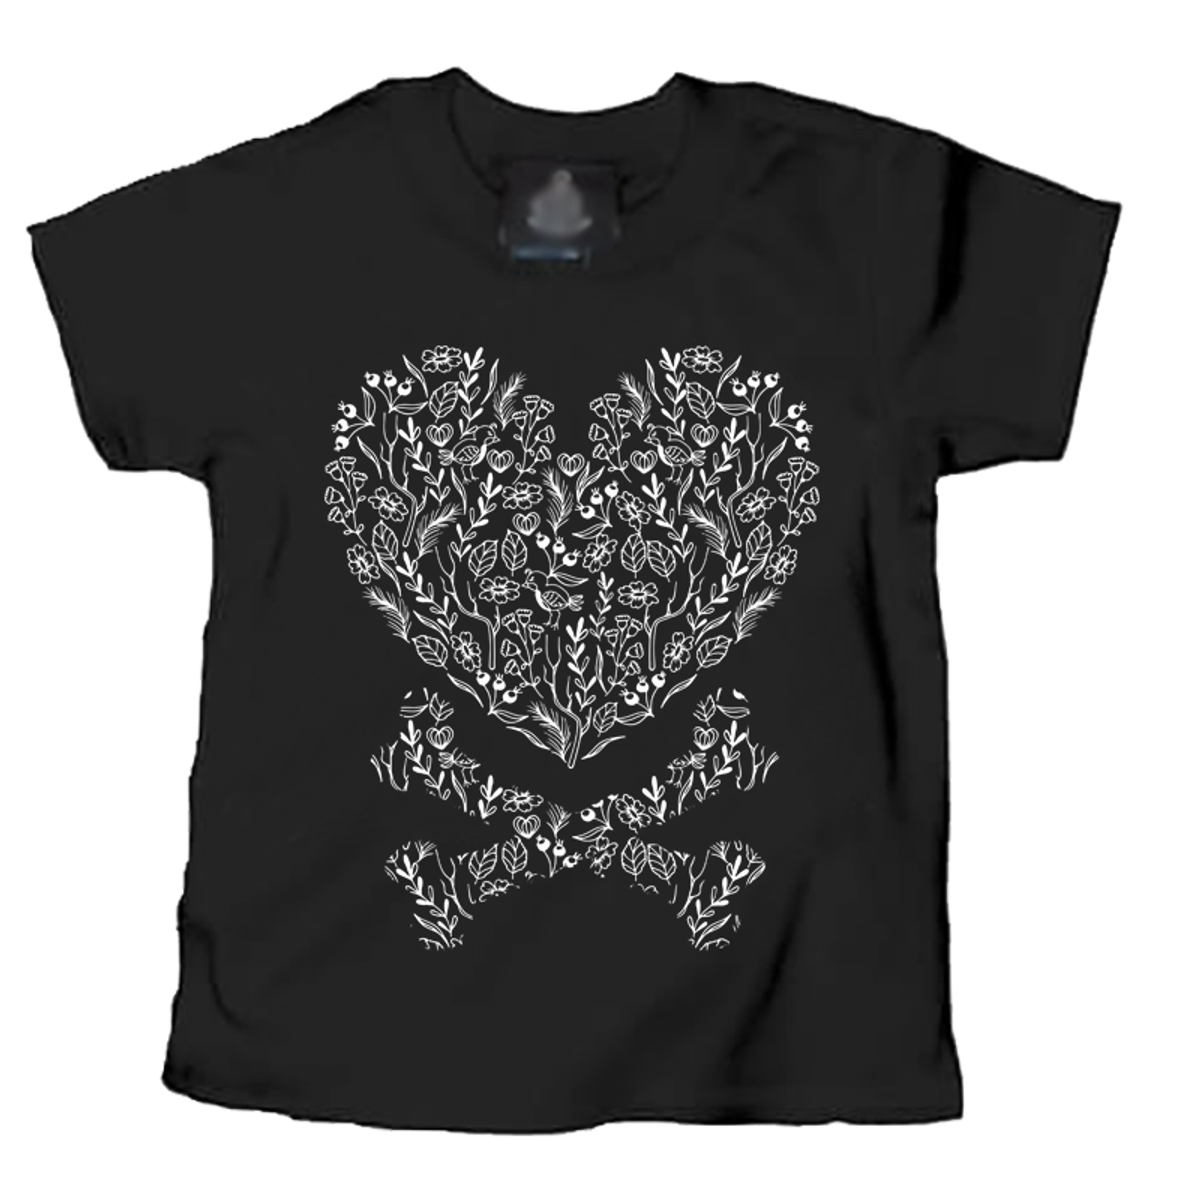 Kids Cross My Heart - Tshirt - The Inked Boys Shop